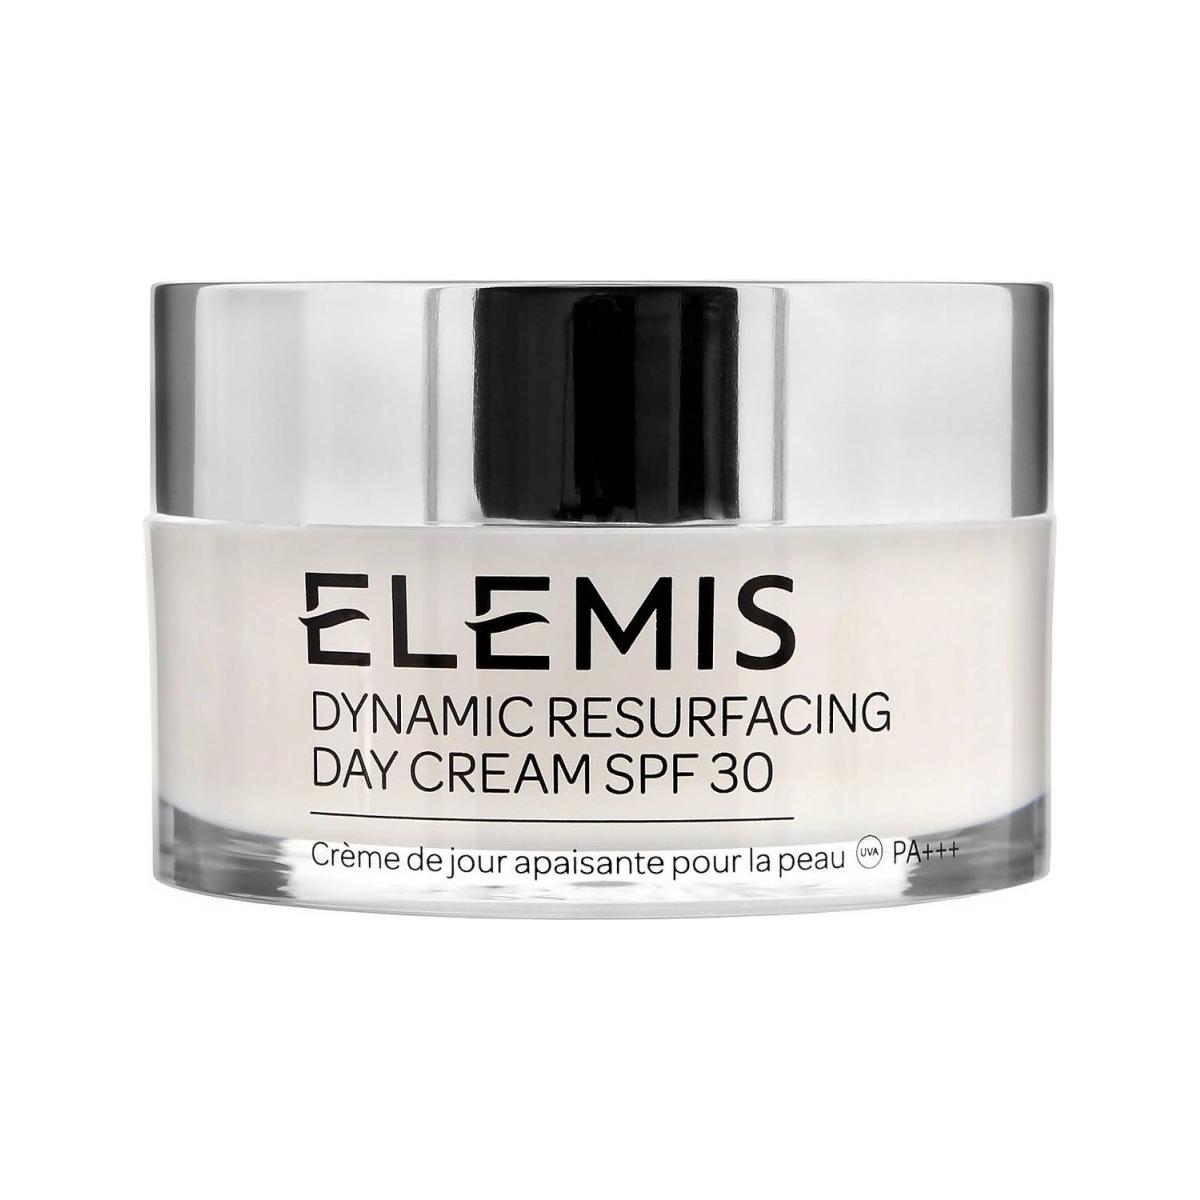 Elemis Dynamic Resurfacing Day Cream SPF 30 50 ml - DG International Ventures Limited